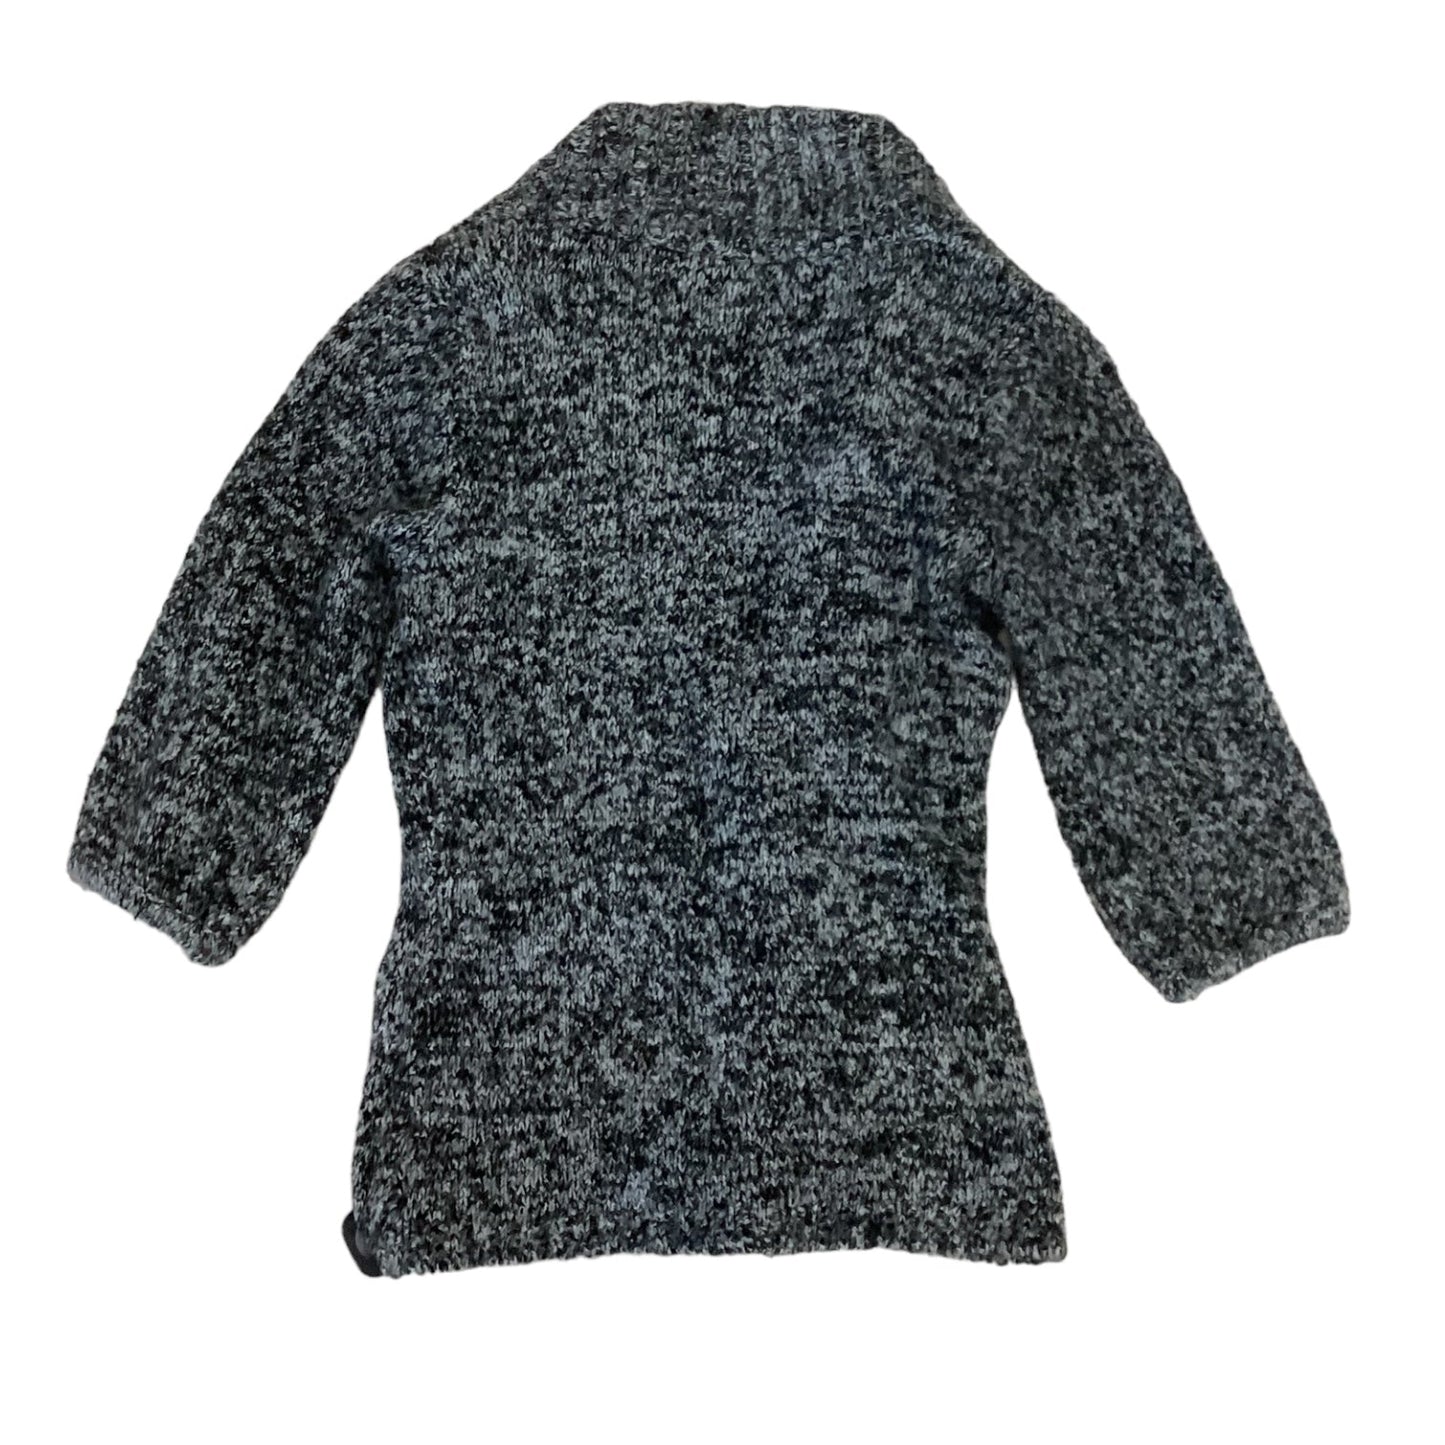 Sweater Cardigan By White House Black Market  Size: Xs